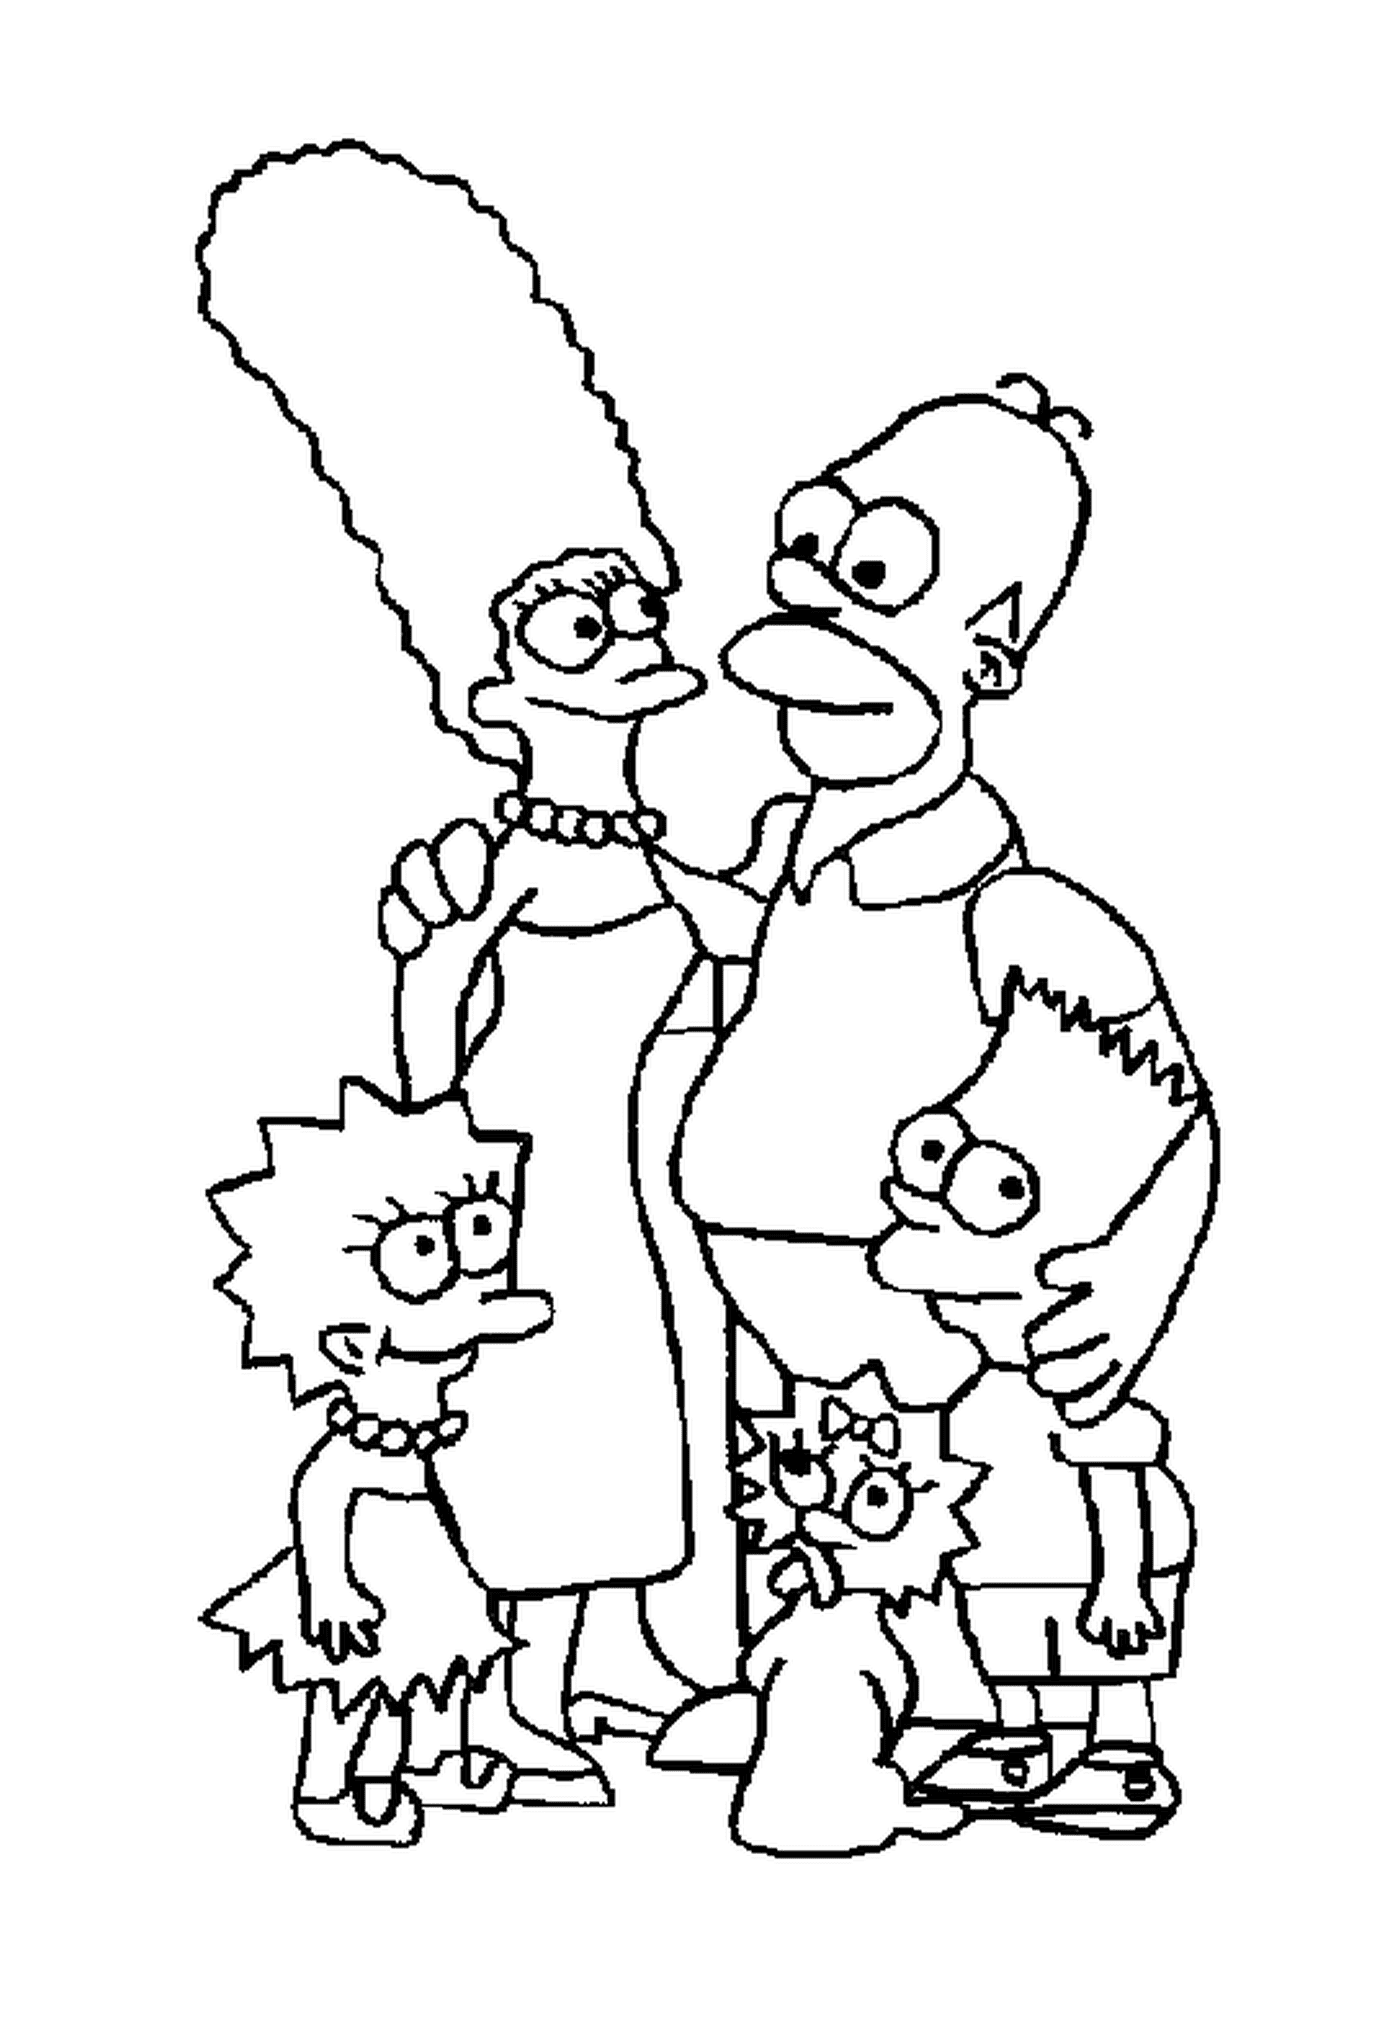  La familia Simpson está reunida 